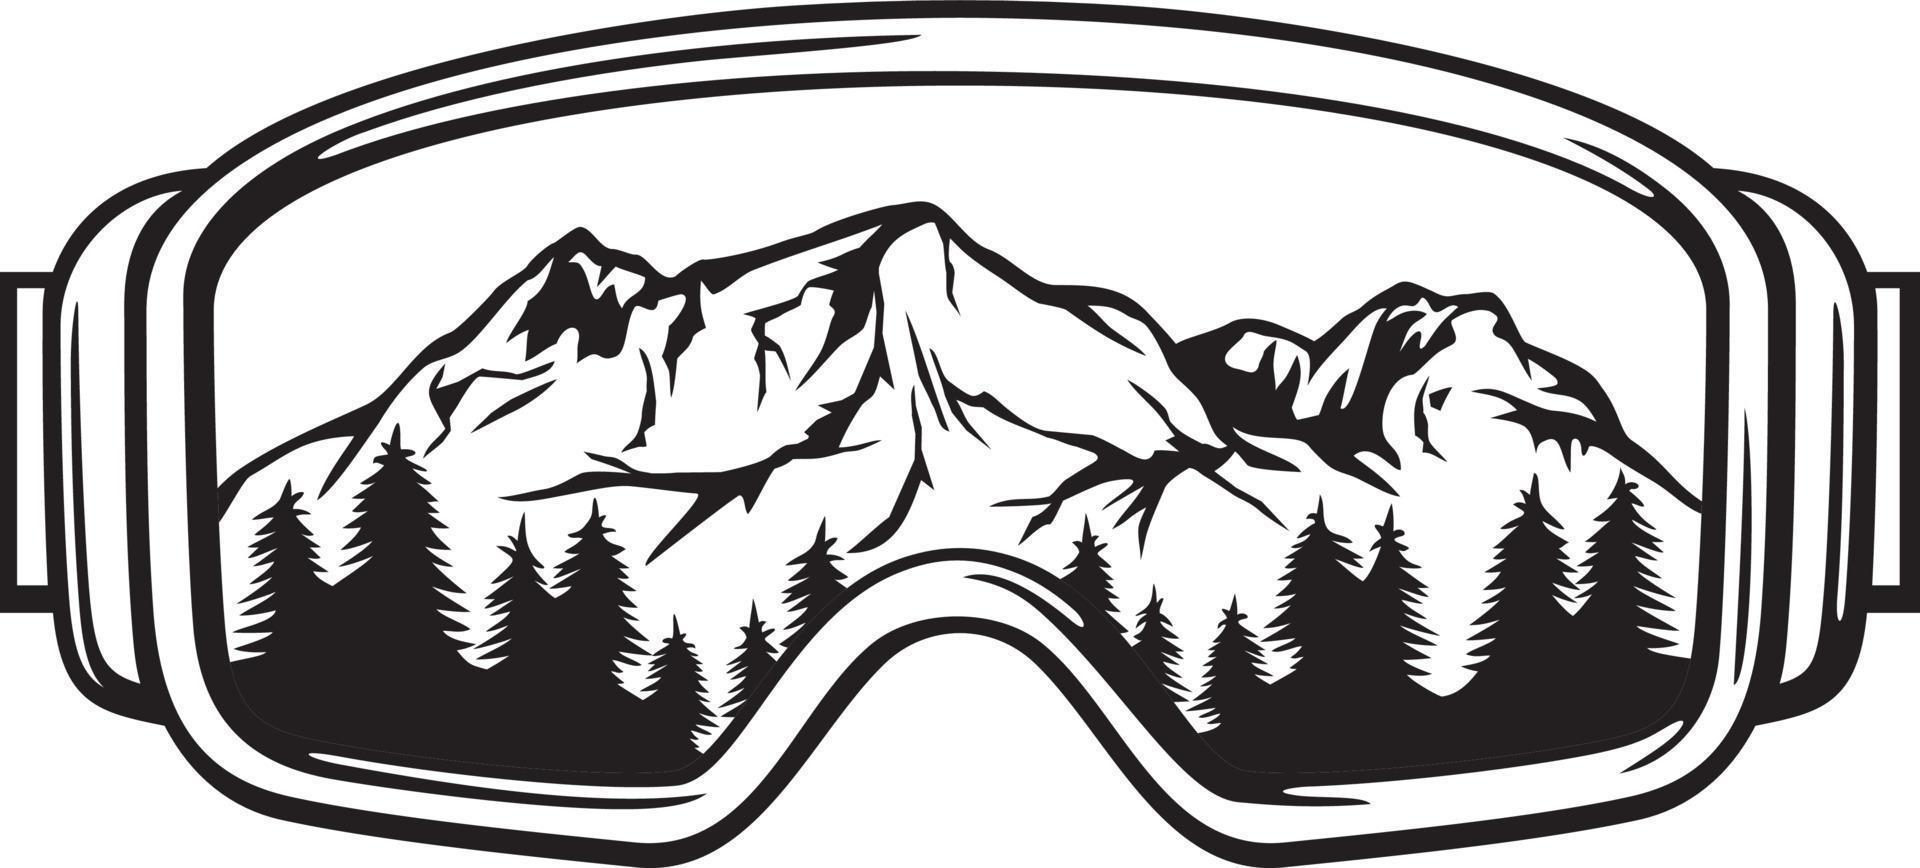 Ski Goggles with Mountains Landscape - Winter Sport Glasses. Vector Illustration.